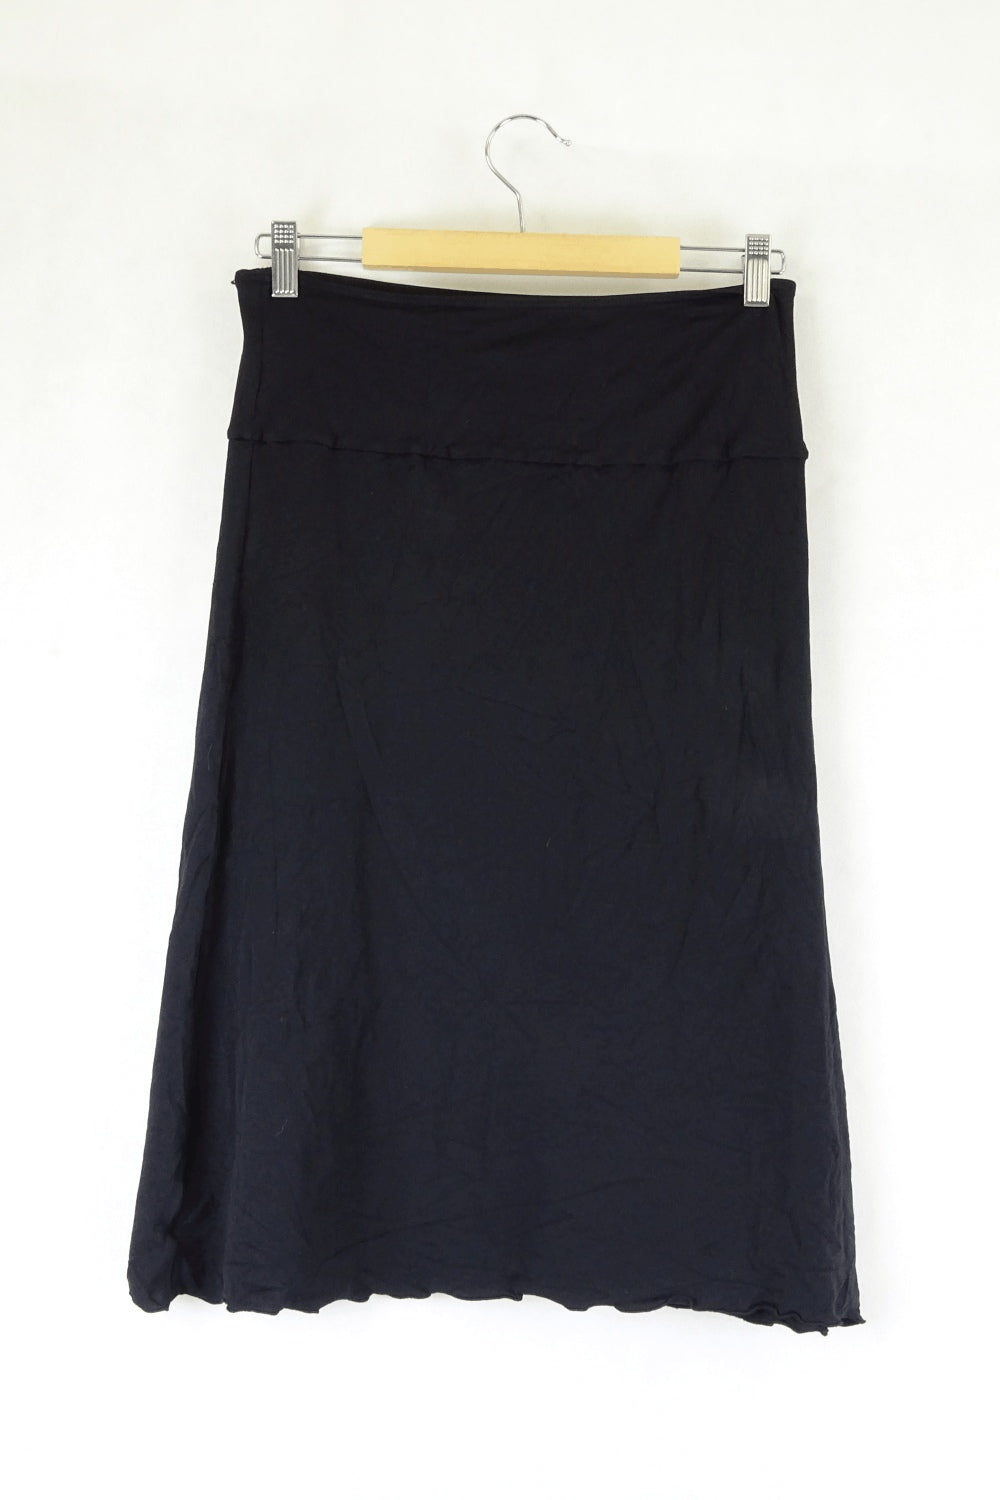 Vigorella Black Skirt S